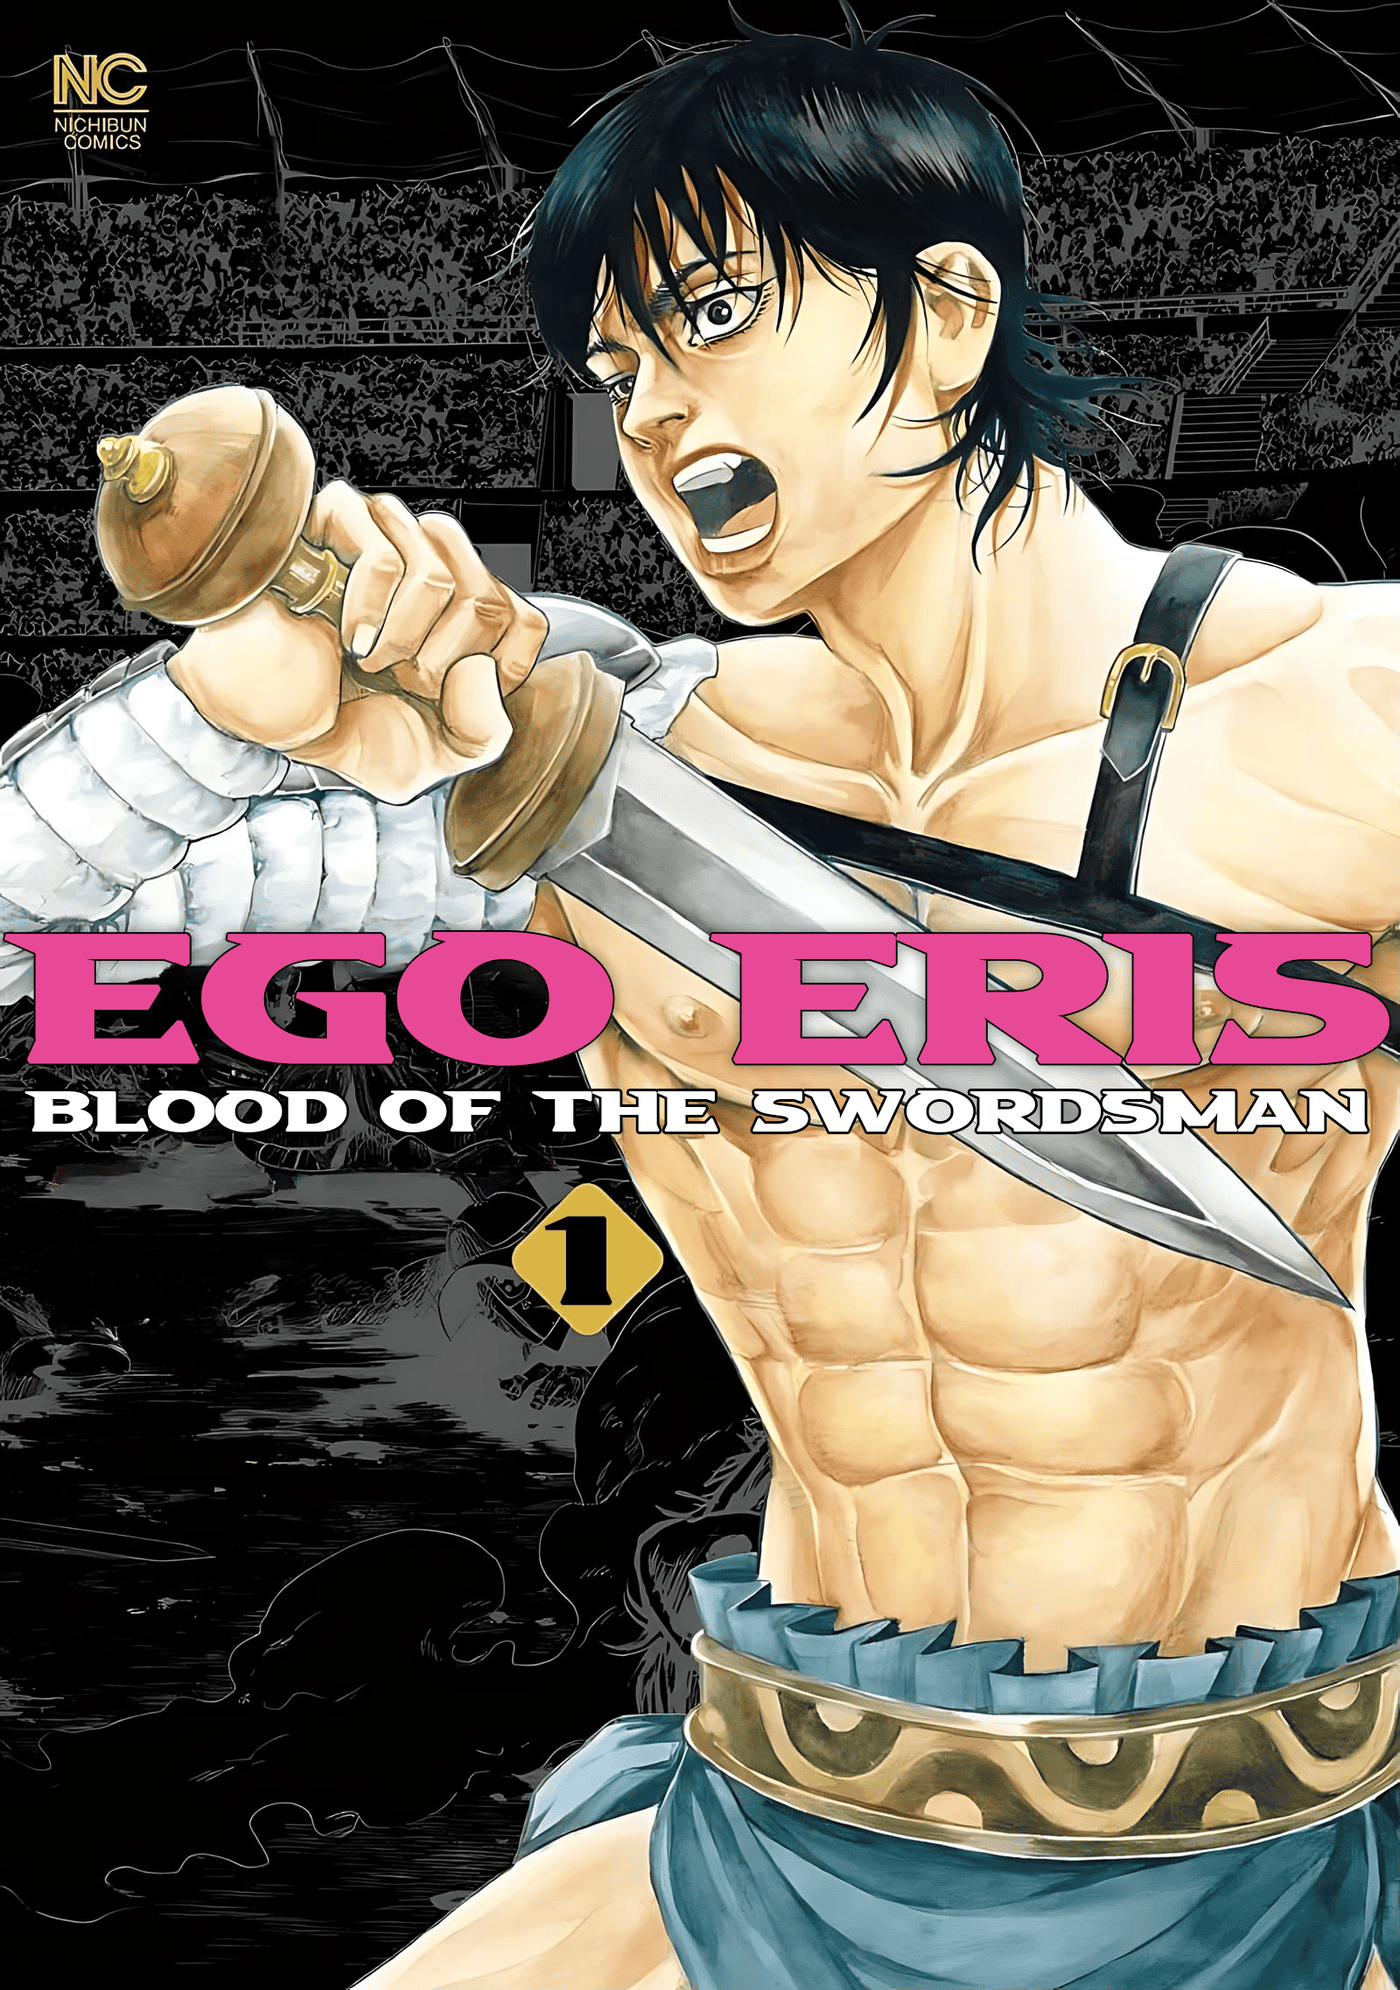 Ego Eris - The Swordman's Blood Vol.1 Chapter 1